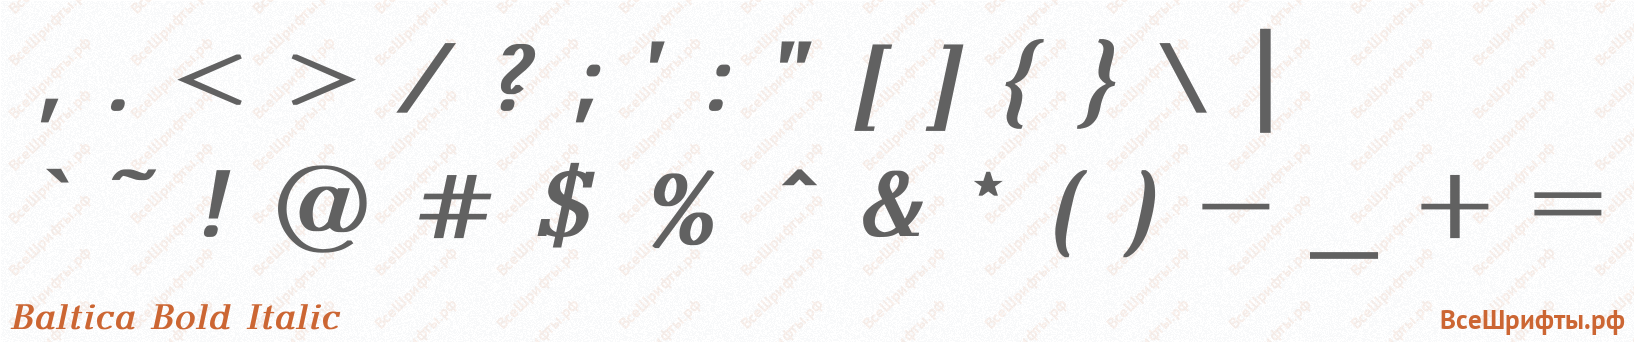 Шрифт Baltica Bold Italic со знаками препинания и пунктуации